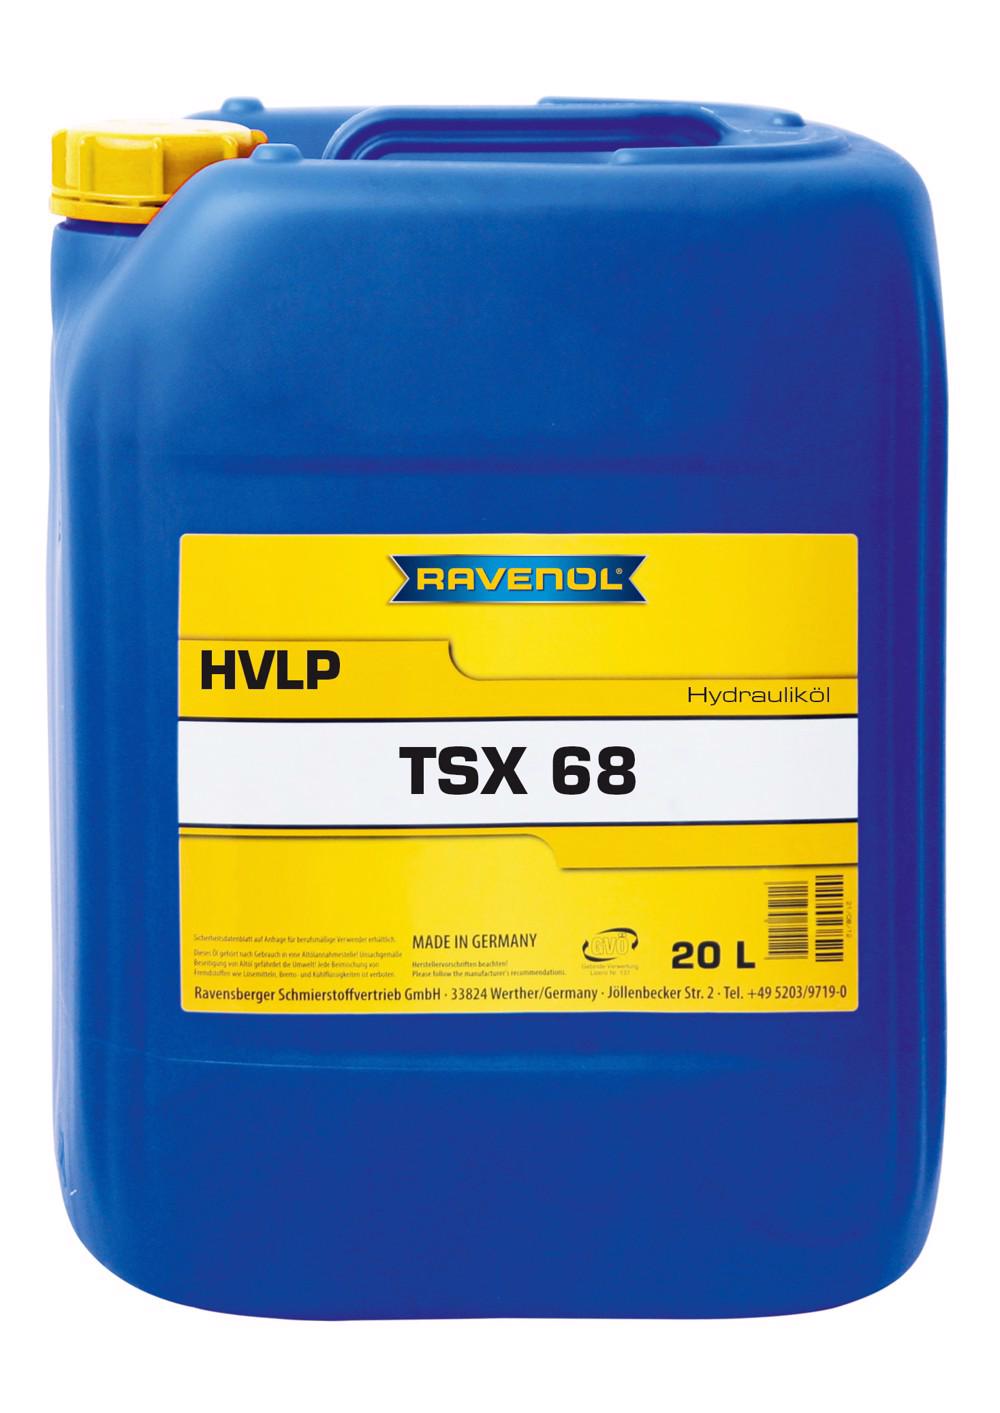 RAVENOL Hydraulikoel TSX 68 (HVLP)  20 L